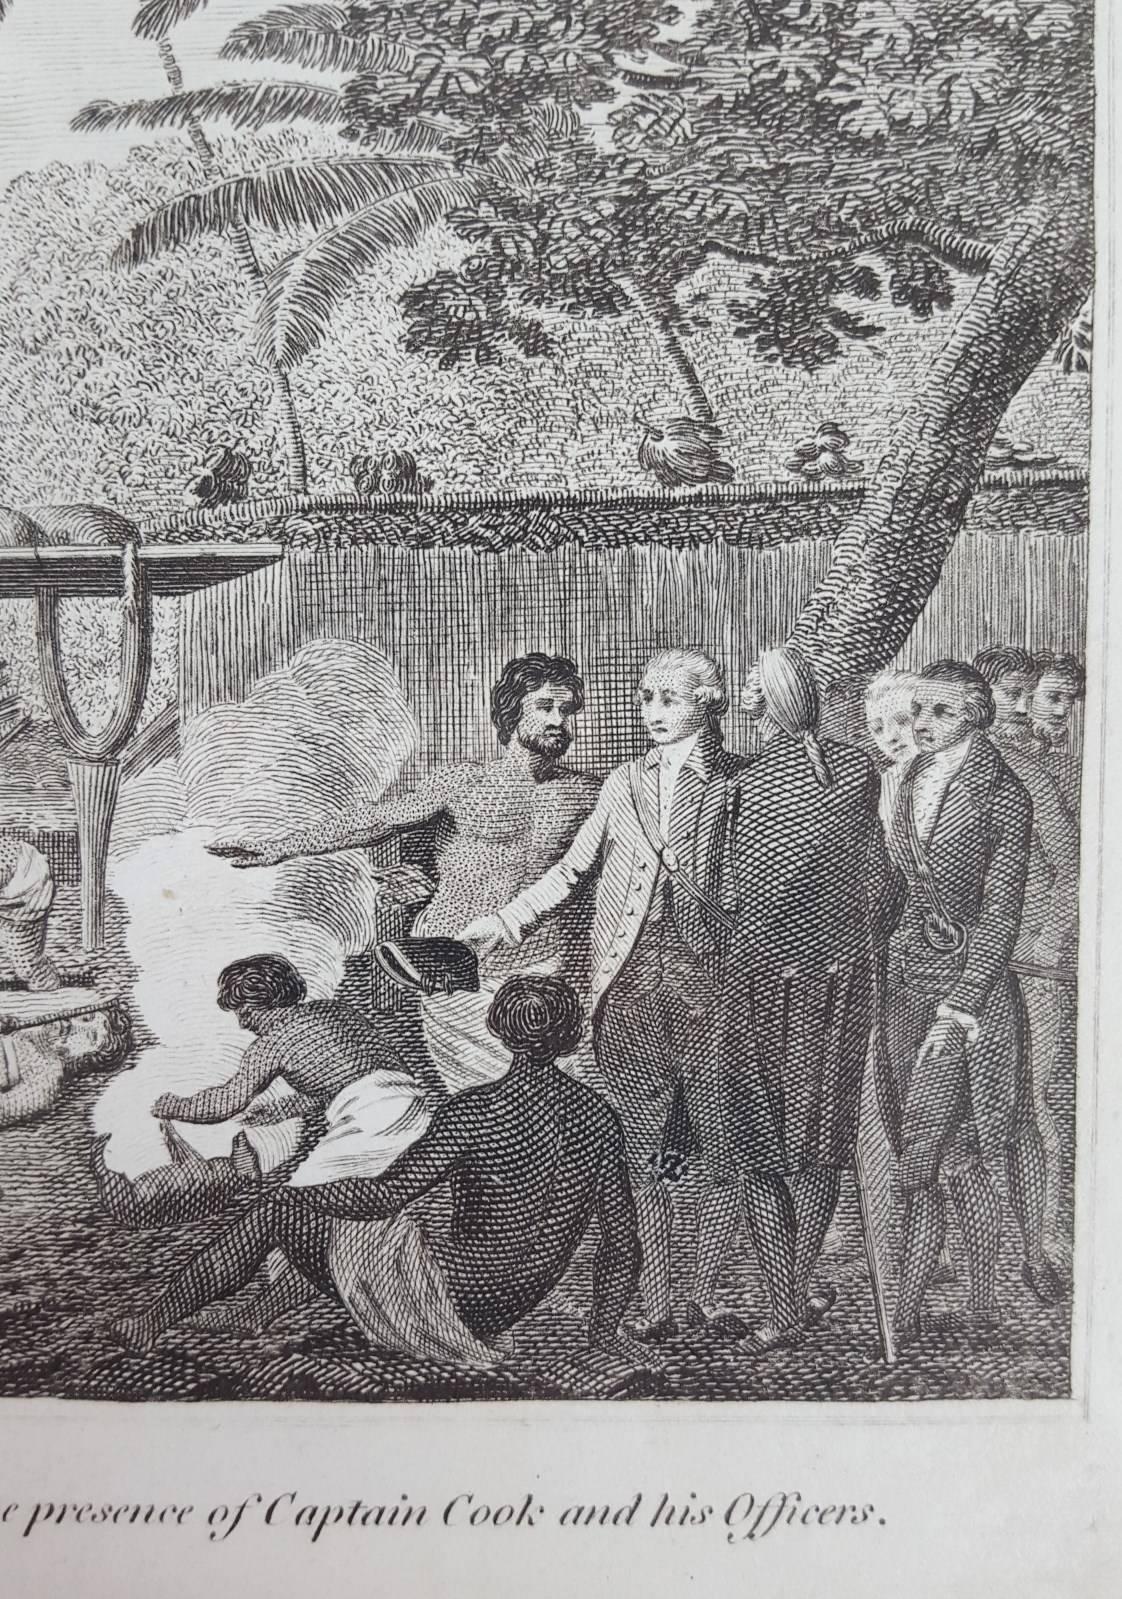 Representation of Human sacrifice with Captain Cook 1